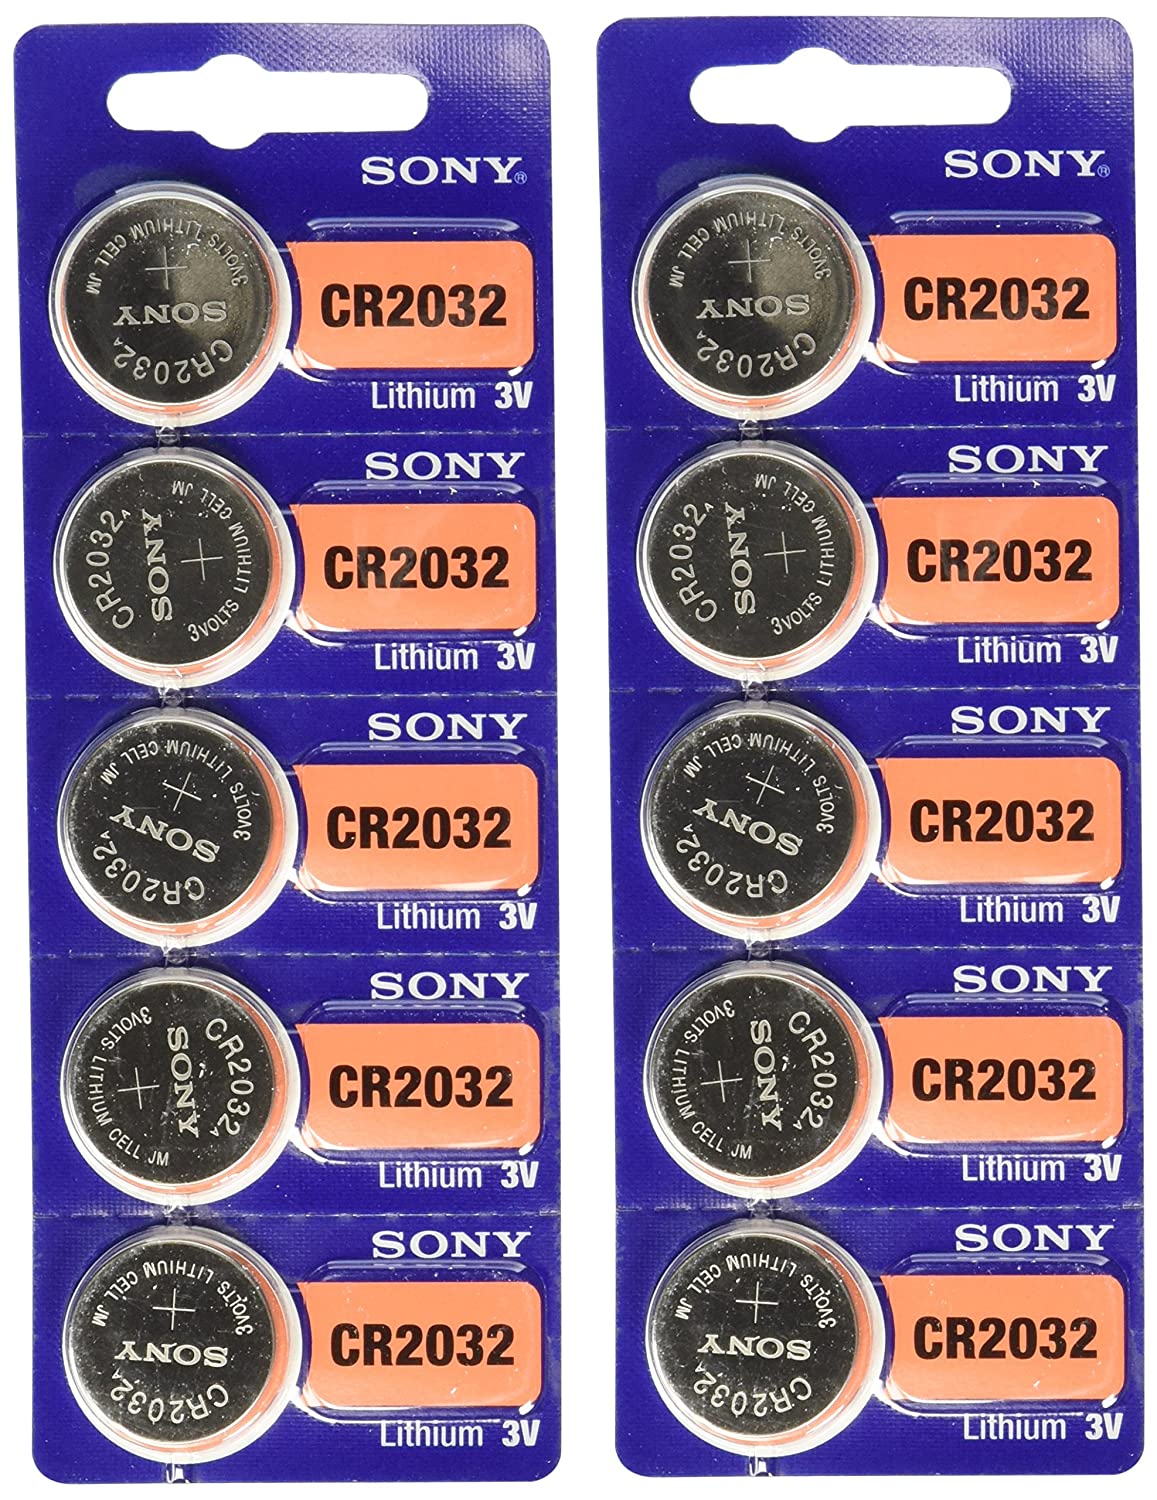 Sony Cr2032 Batteries